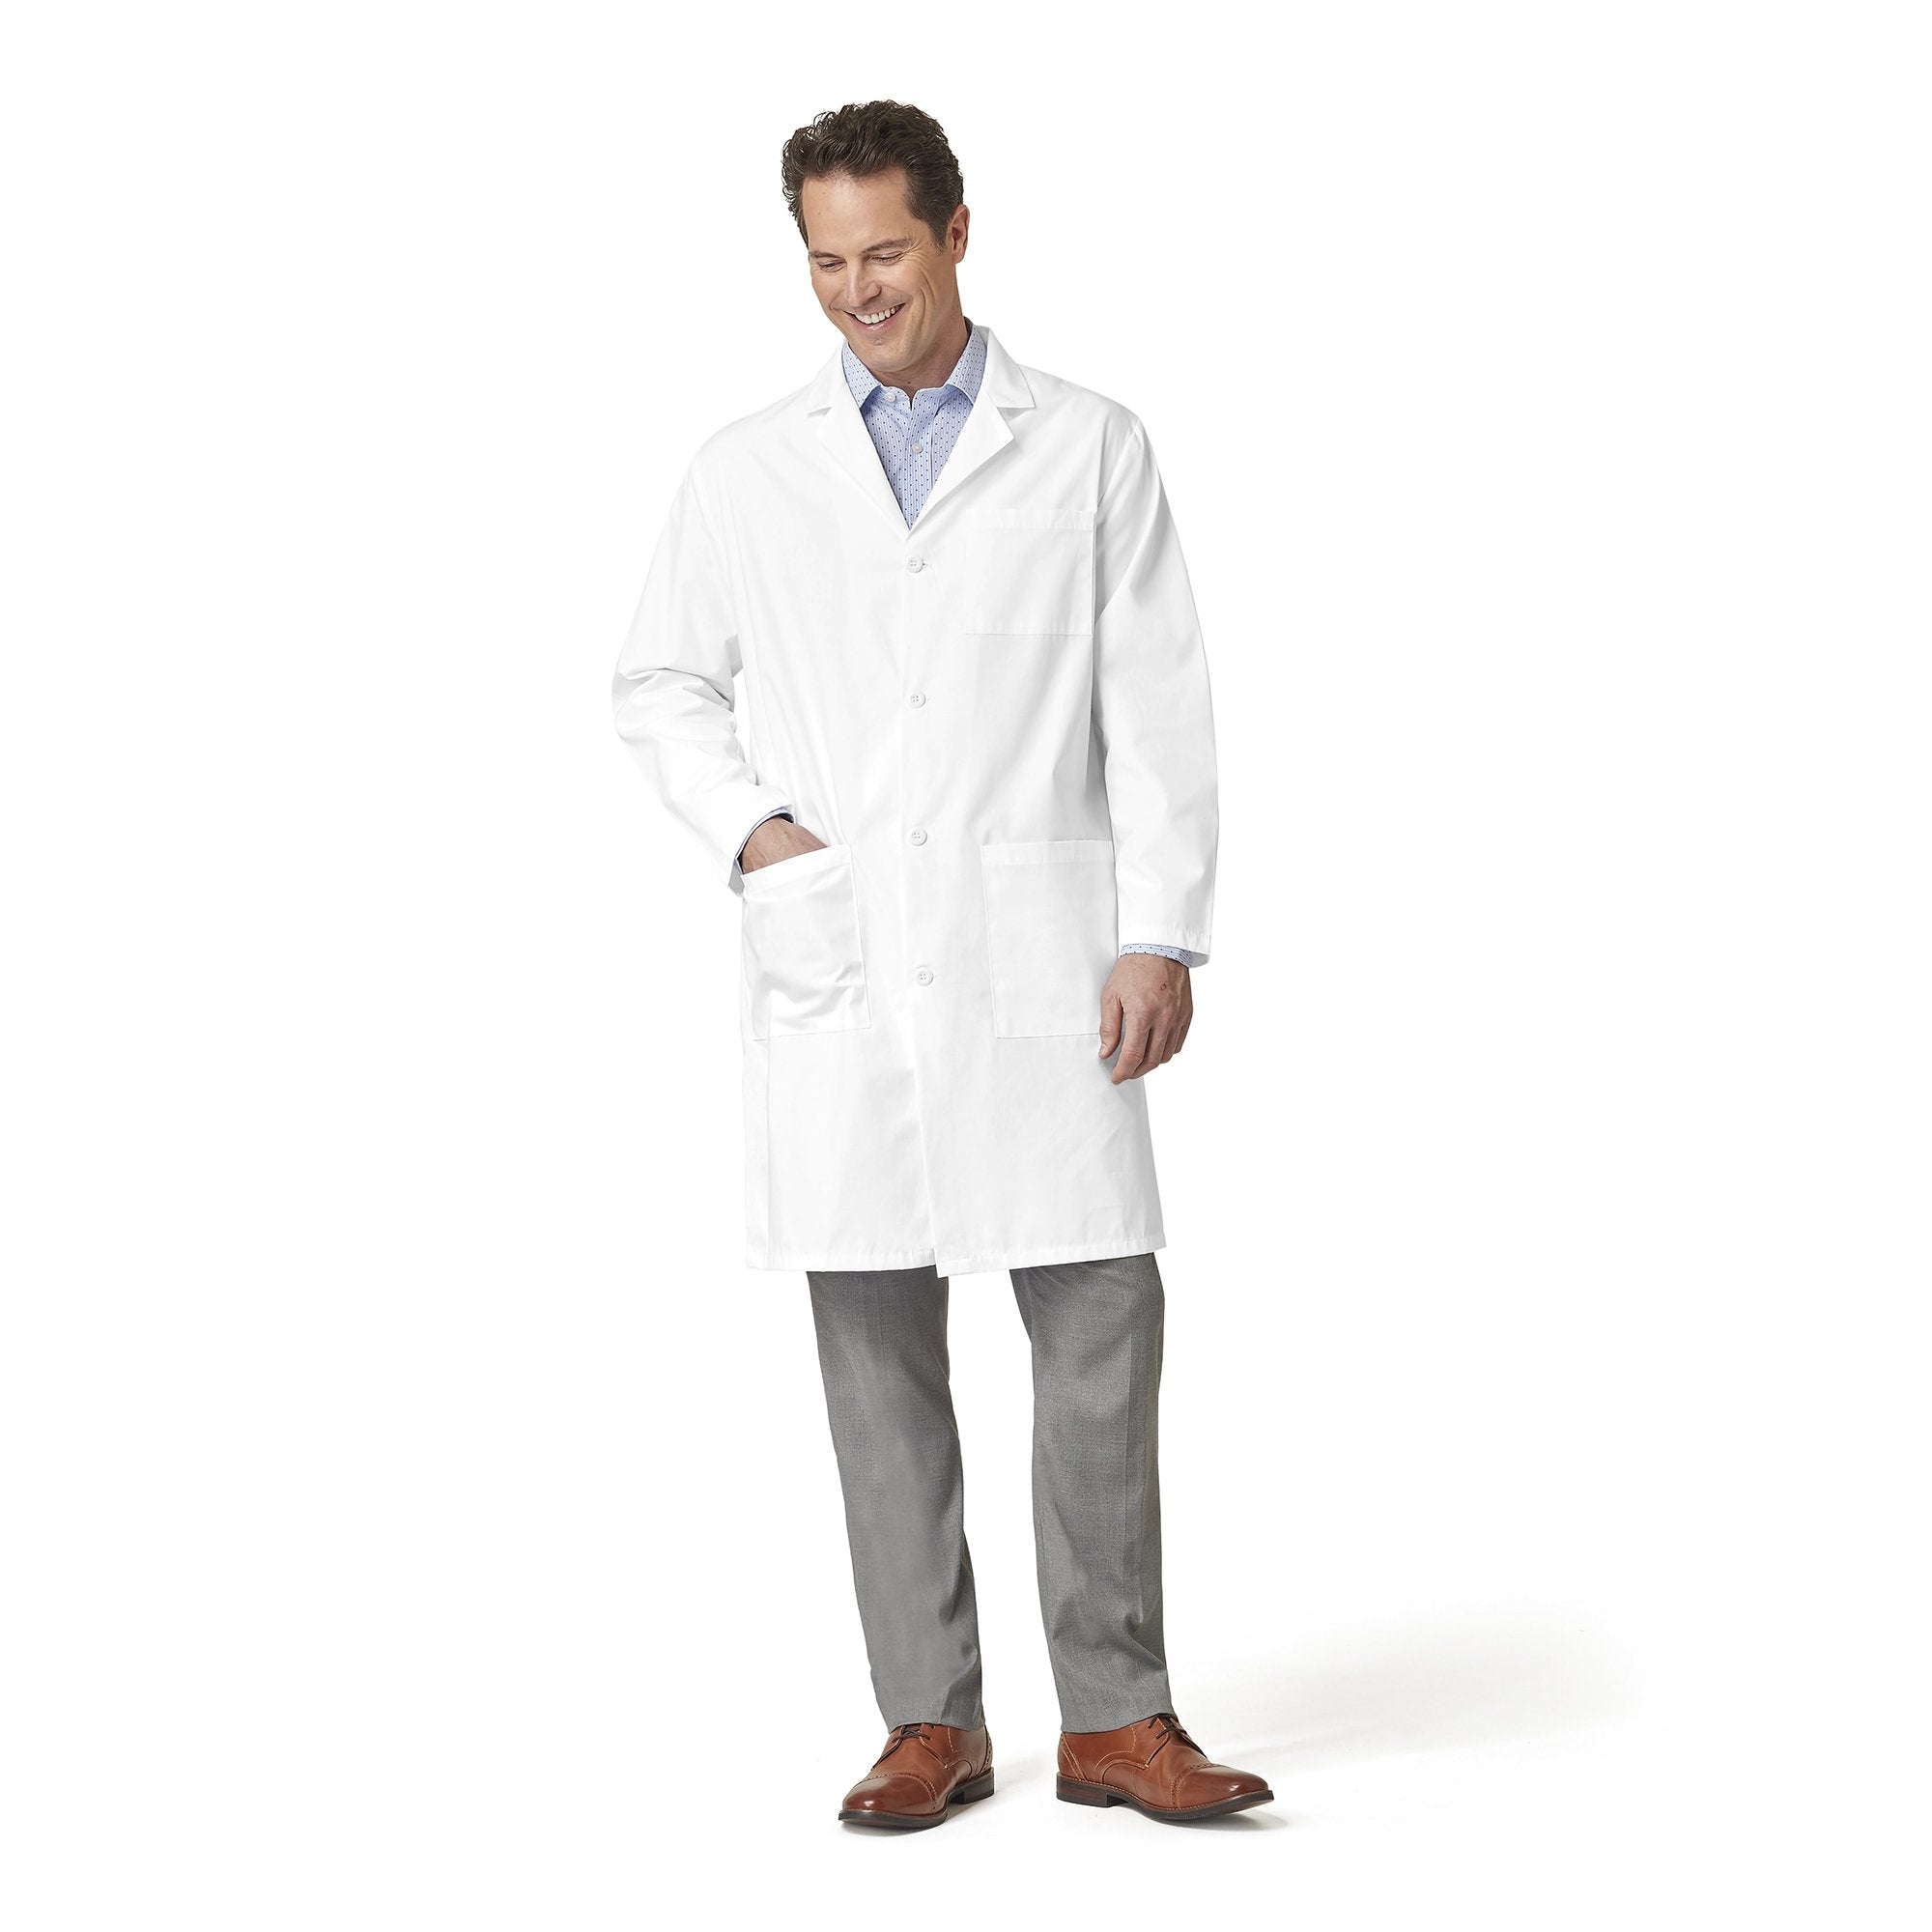 Fashion Seal Healthcare Lab Coat, Medium, White -Each